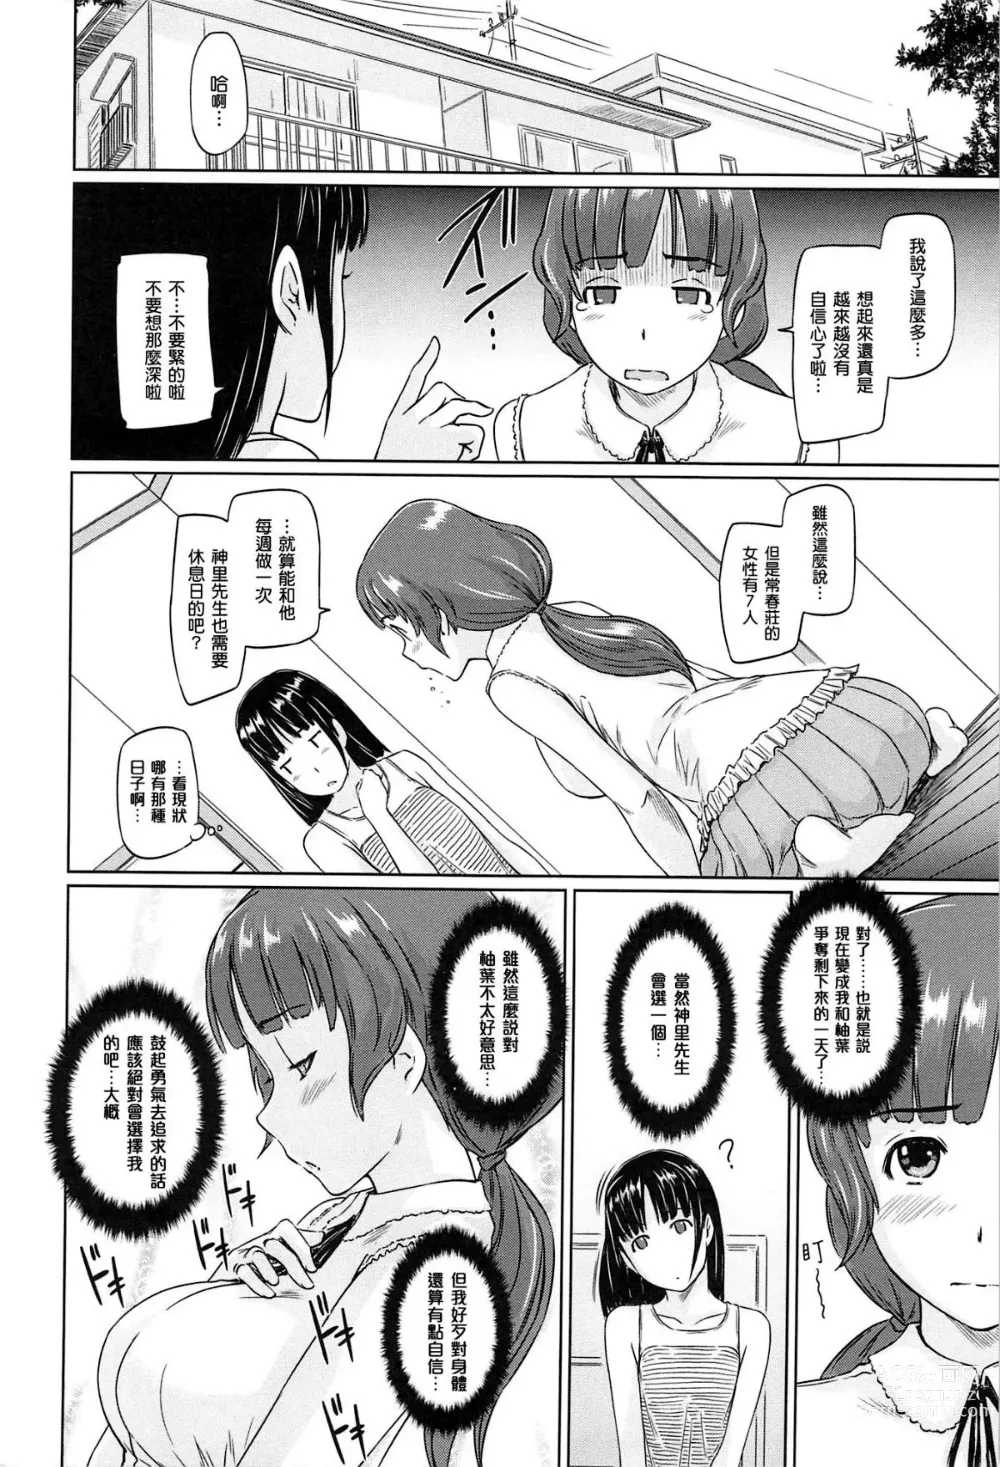 Page 228 of manga Welcome to Tokoharu Apartments (uncensored)